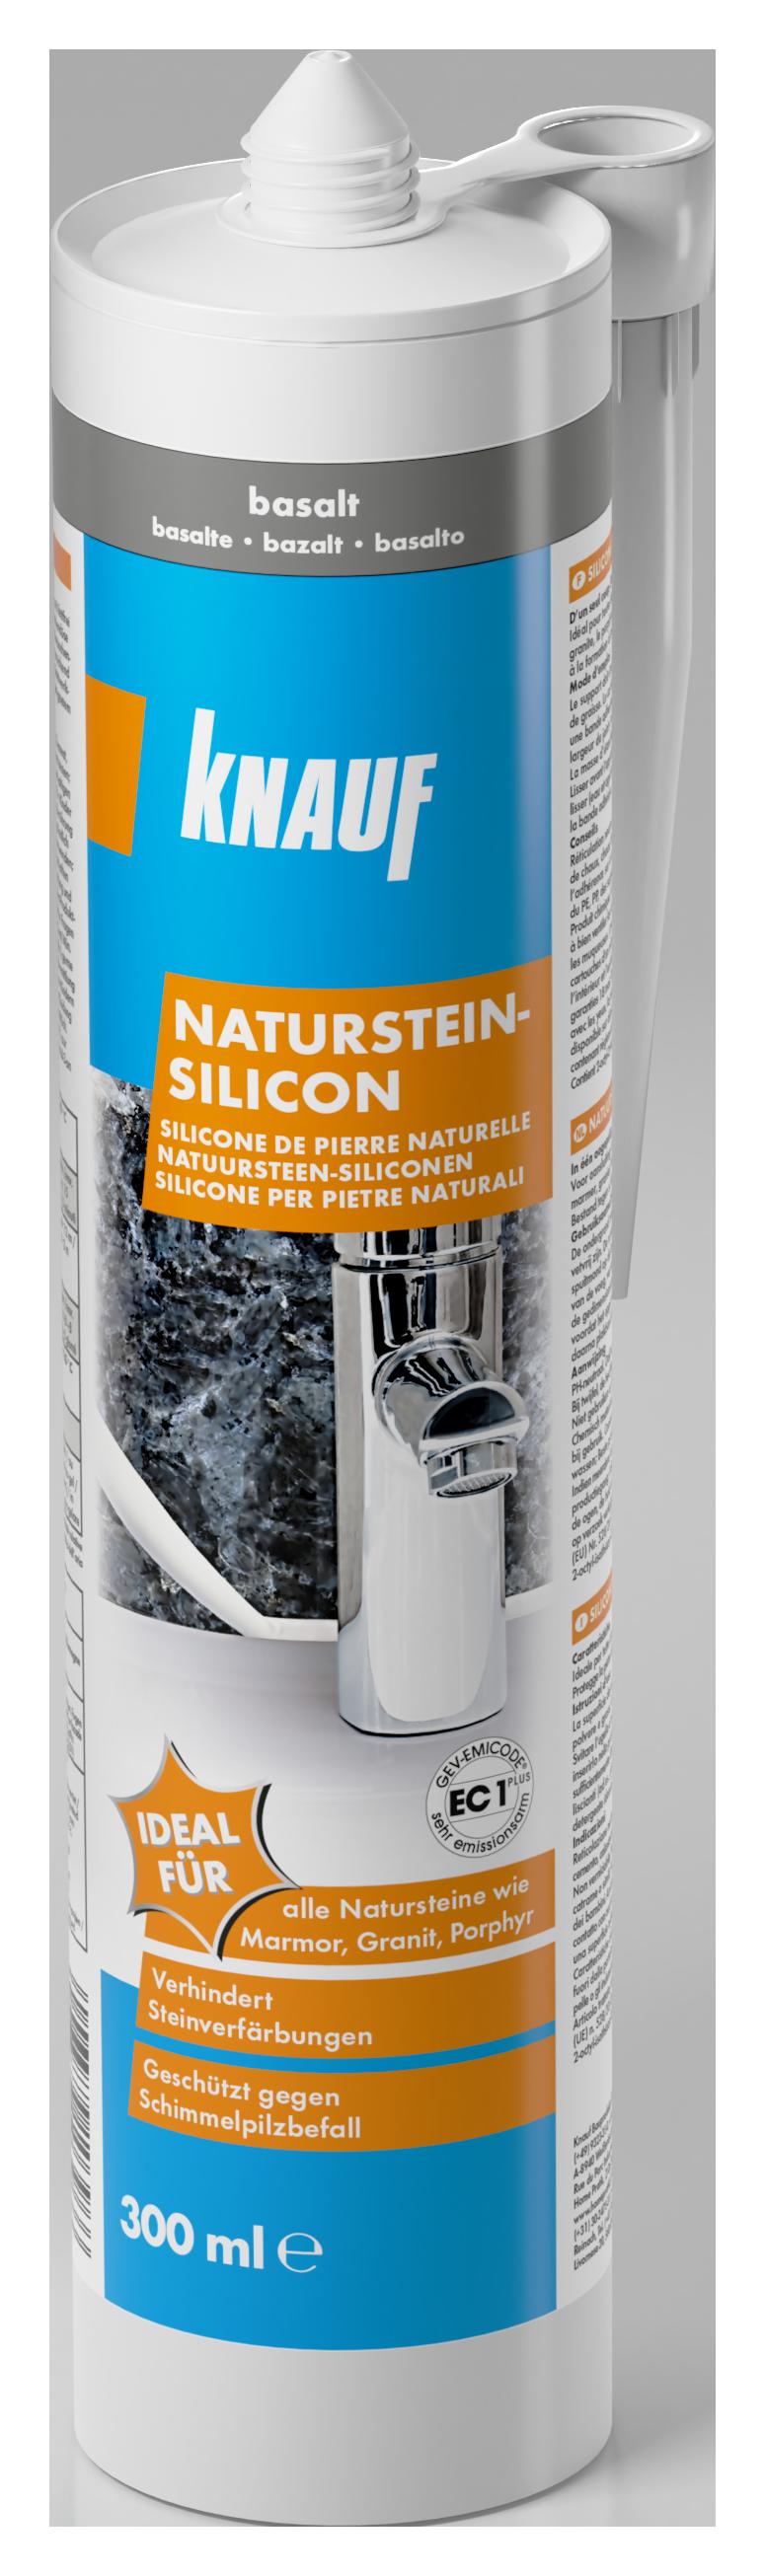 Knauf Naturstein-Silicon, 300 ml